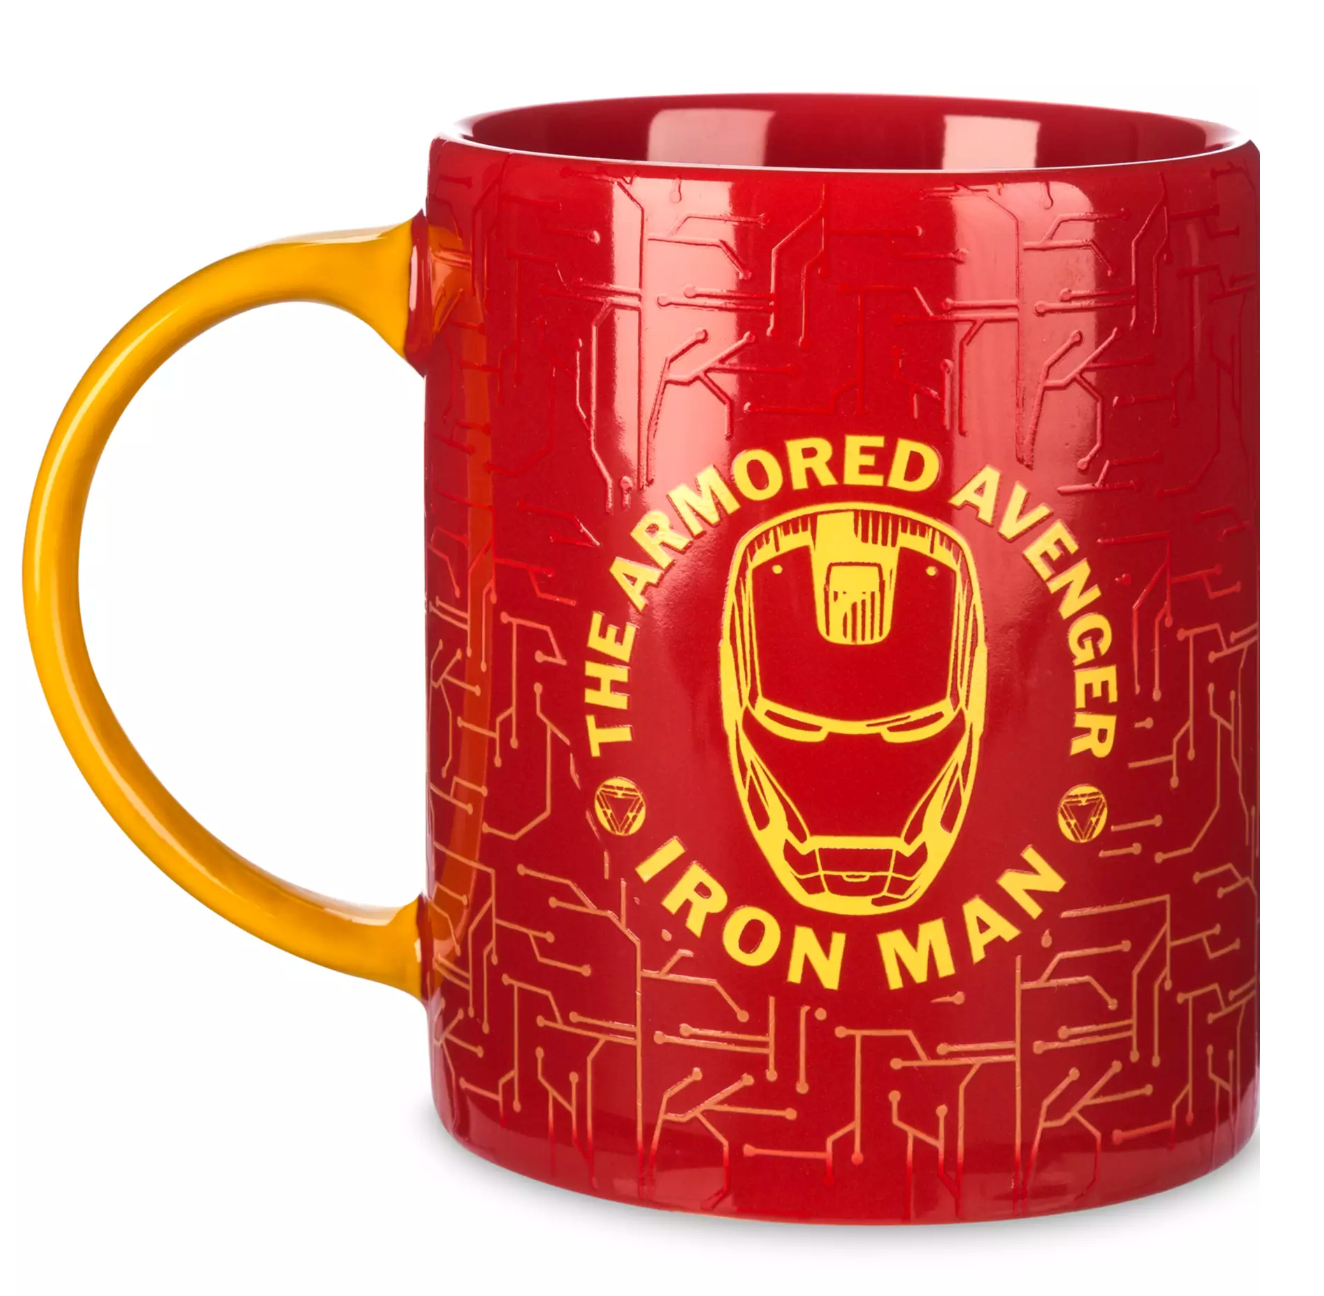 Disney Marvel Iron Man Color Changing 16oz Coffee Mug New